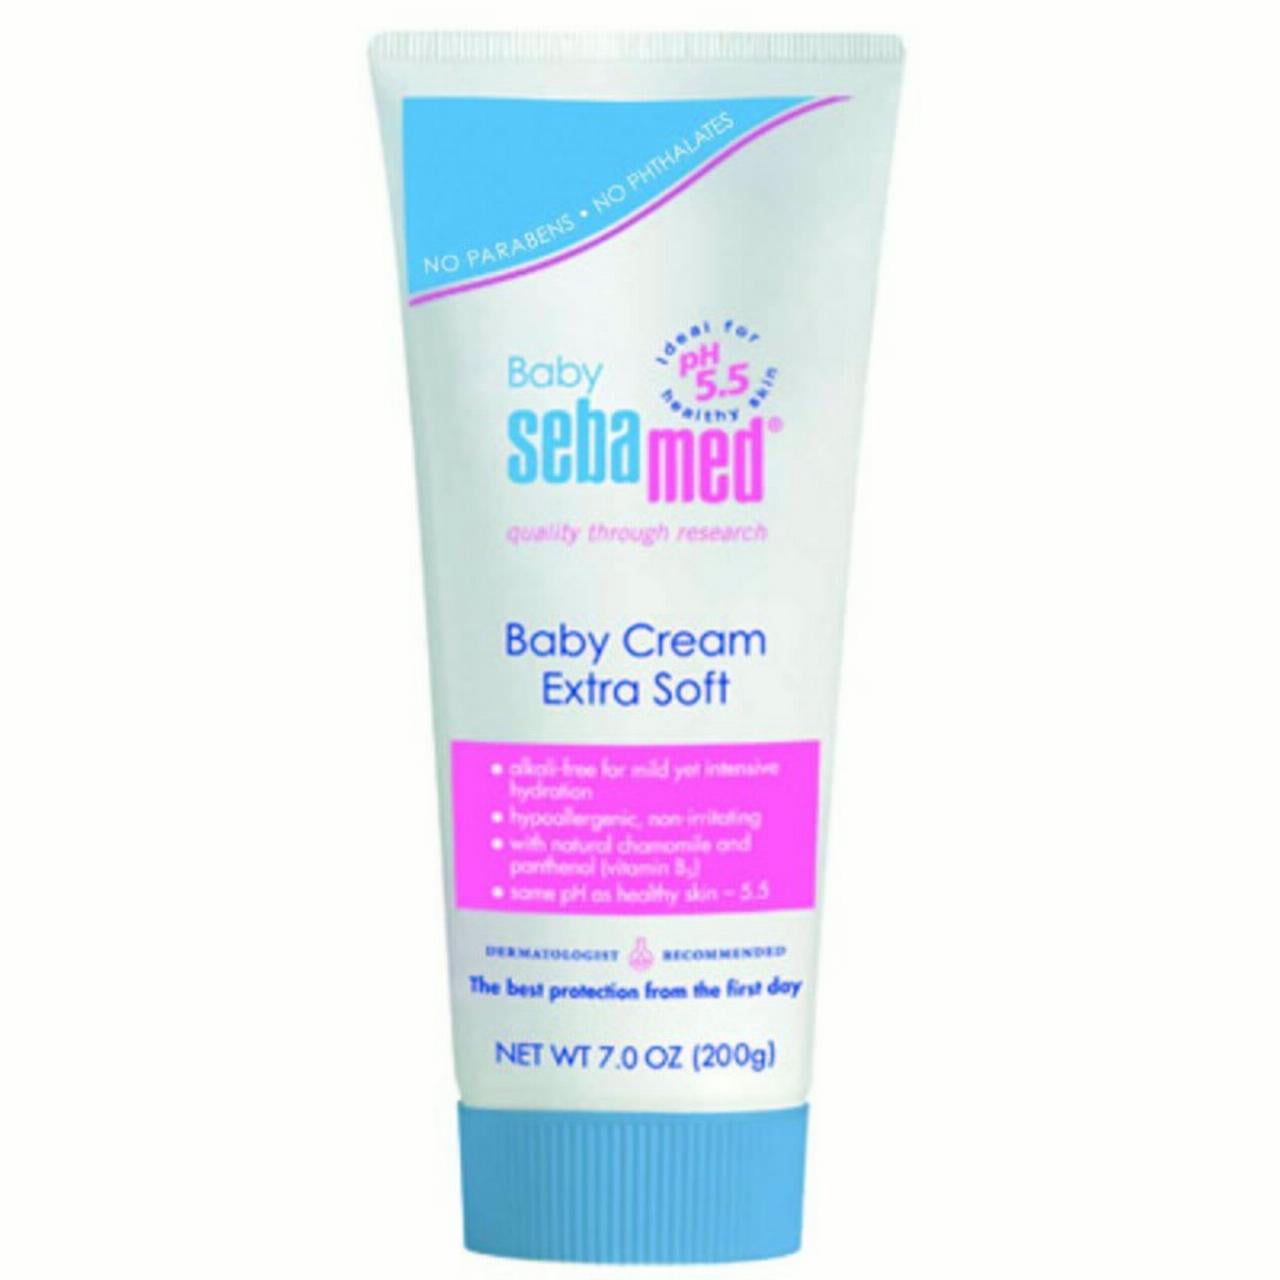 baby sebamed care cream